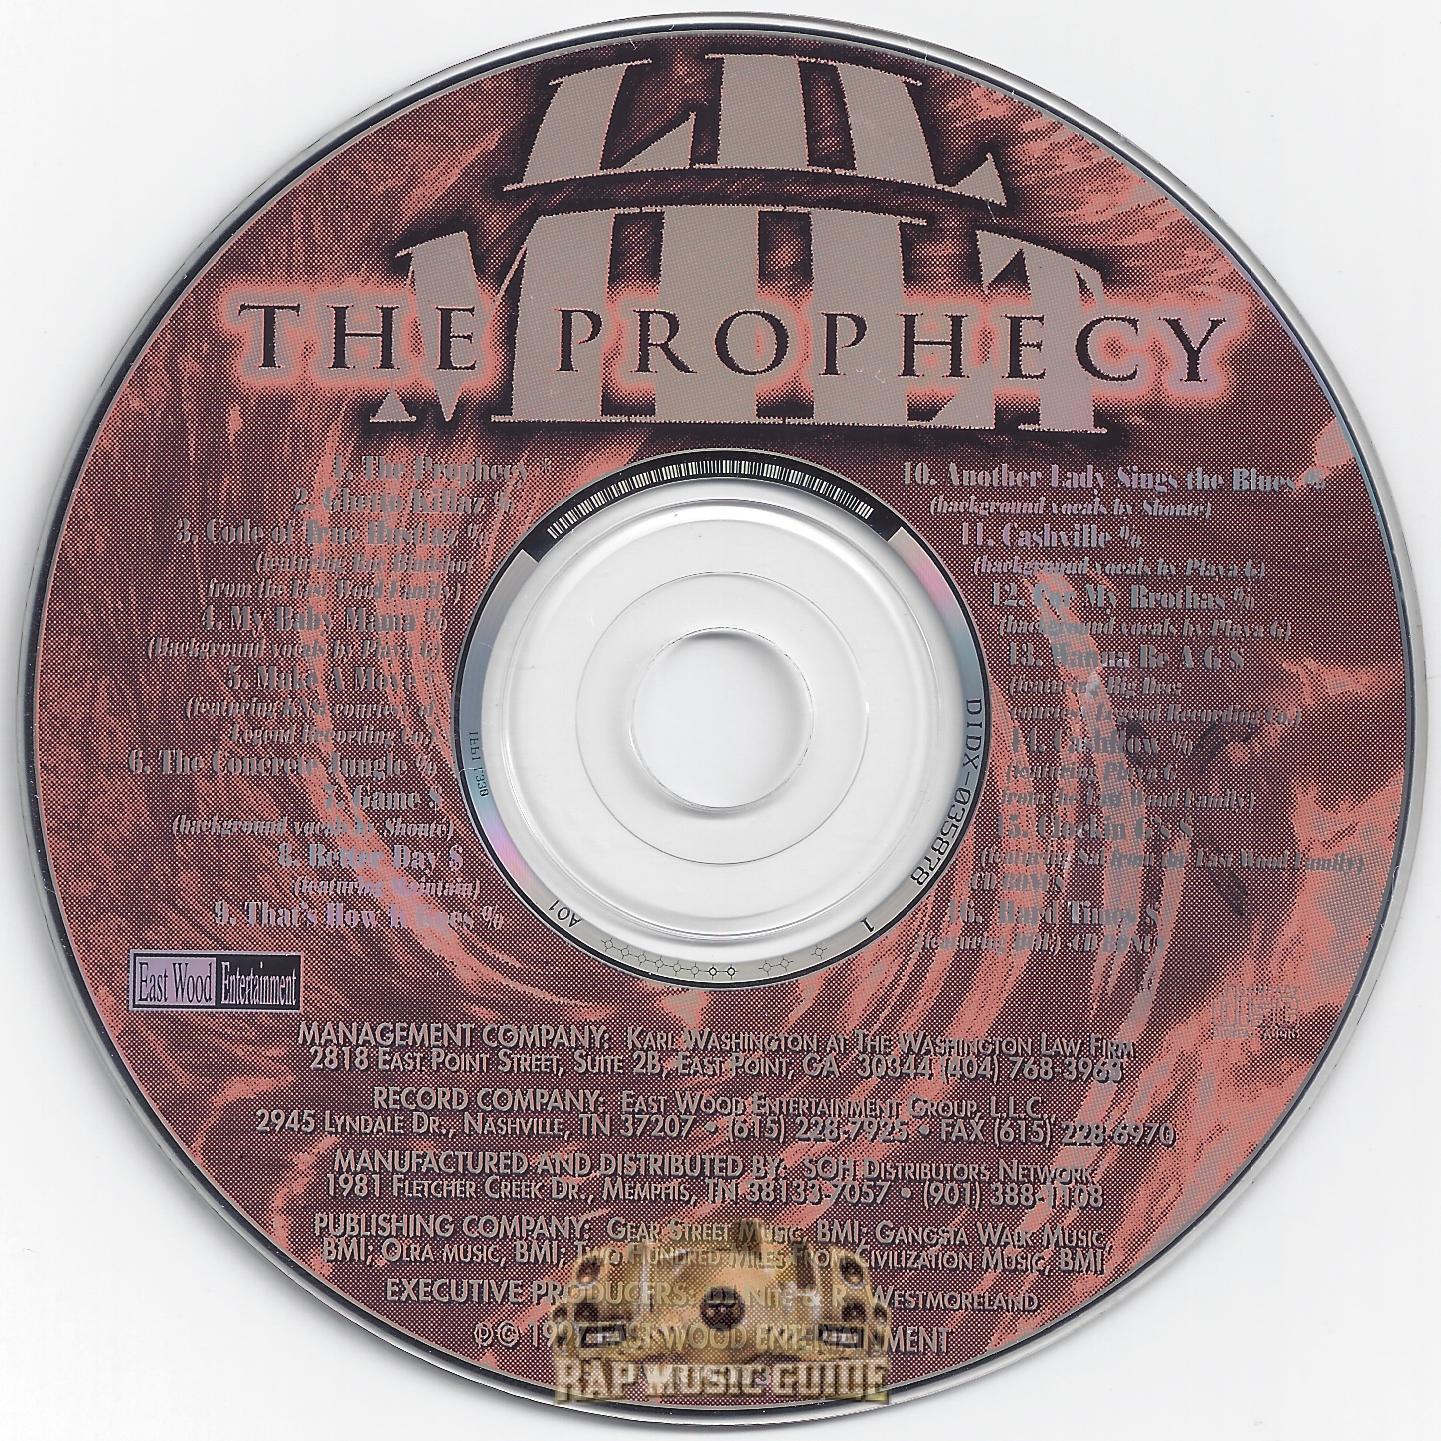 LIL MILT THE PROPHECY G-LUV掲載大名盤 G-rap - 洋楽